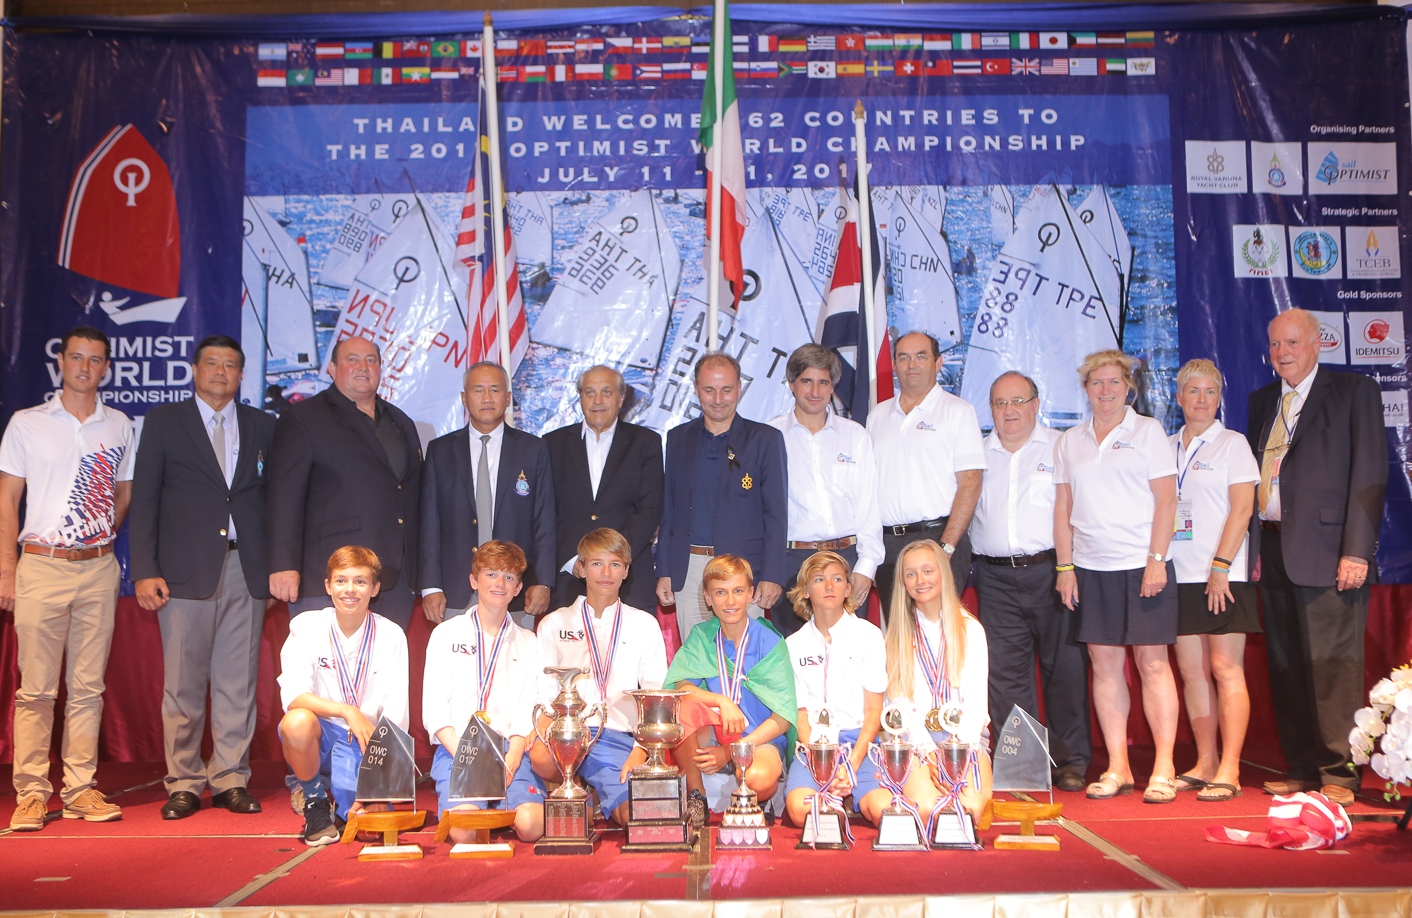 New World Youth Sailing Champions honoured at end of Regatta Optimist World Championship 2017